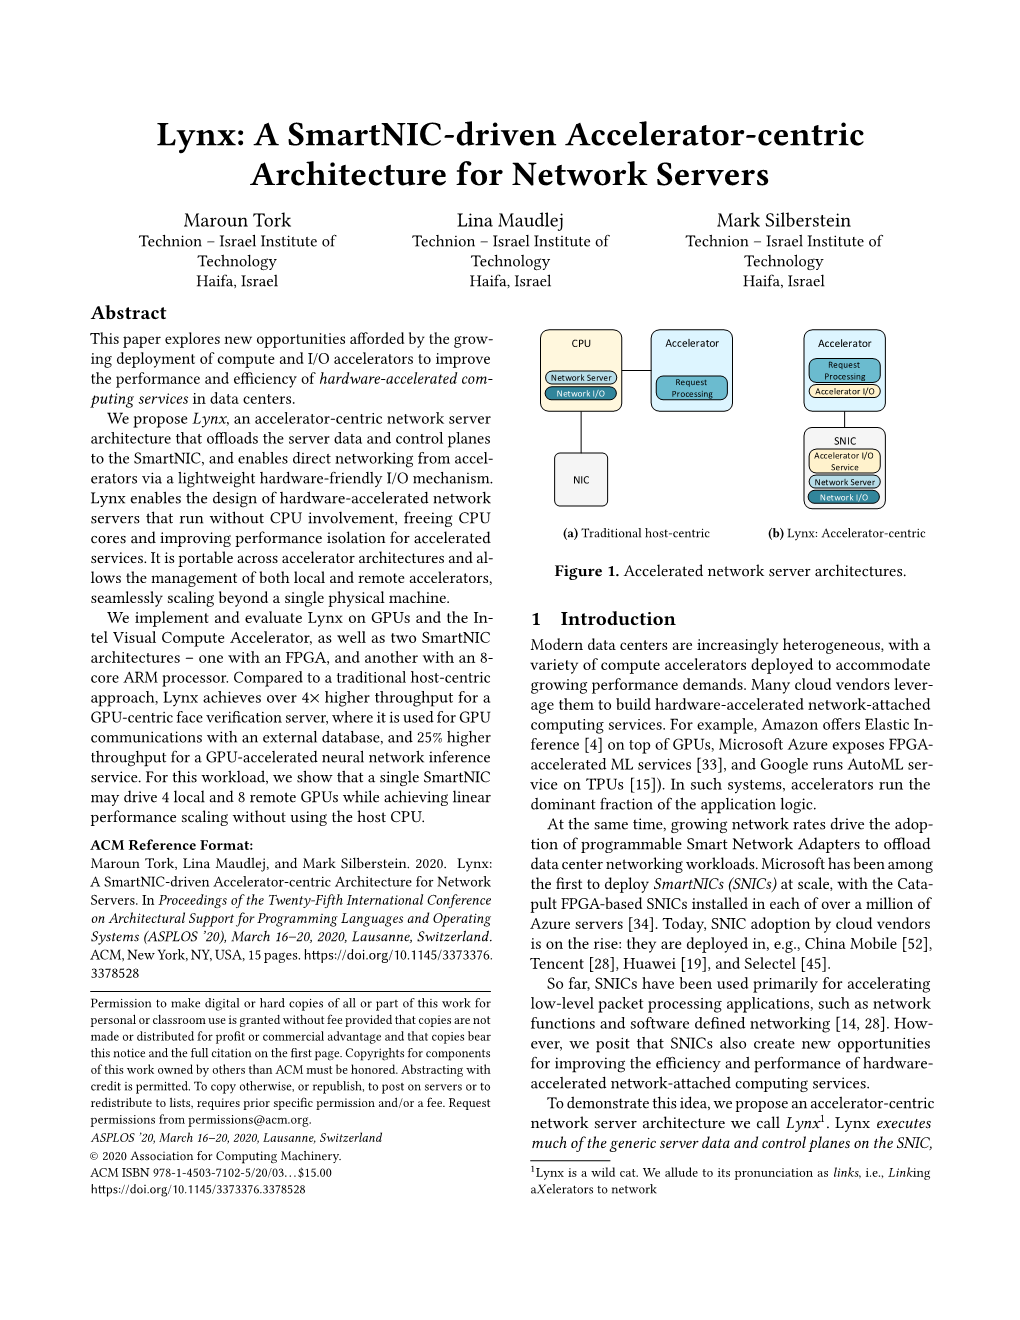 Lynx: a Smartnic-Driven Accelerator-Centric Architecture for Network Servers